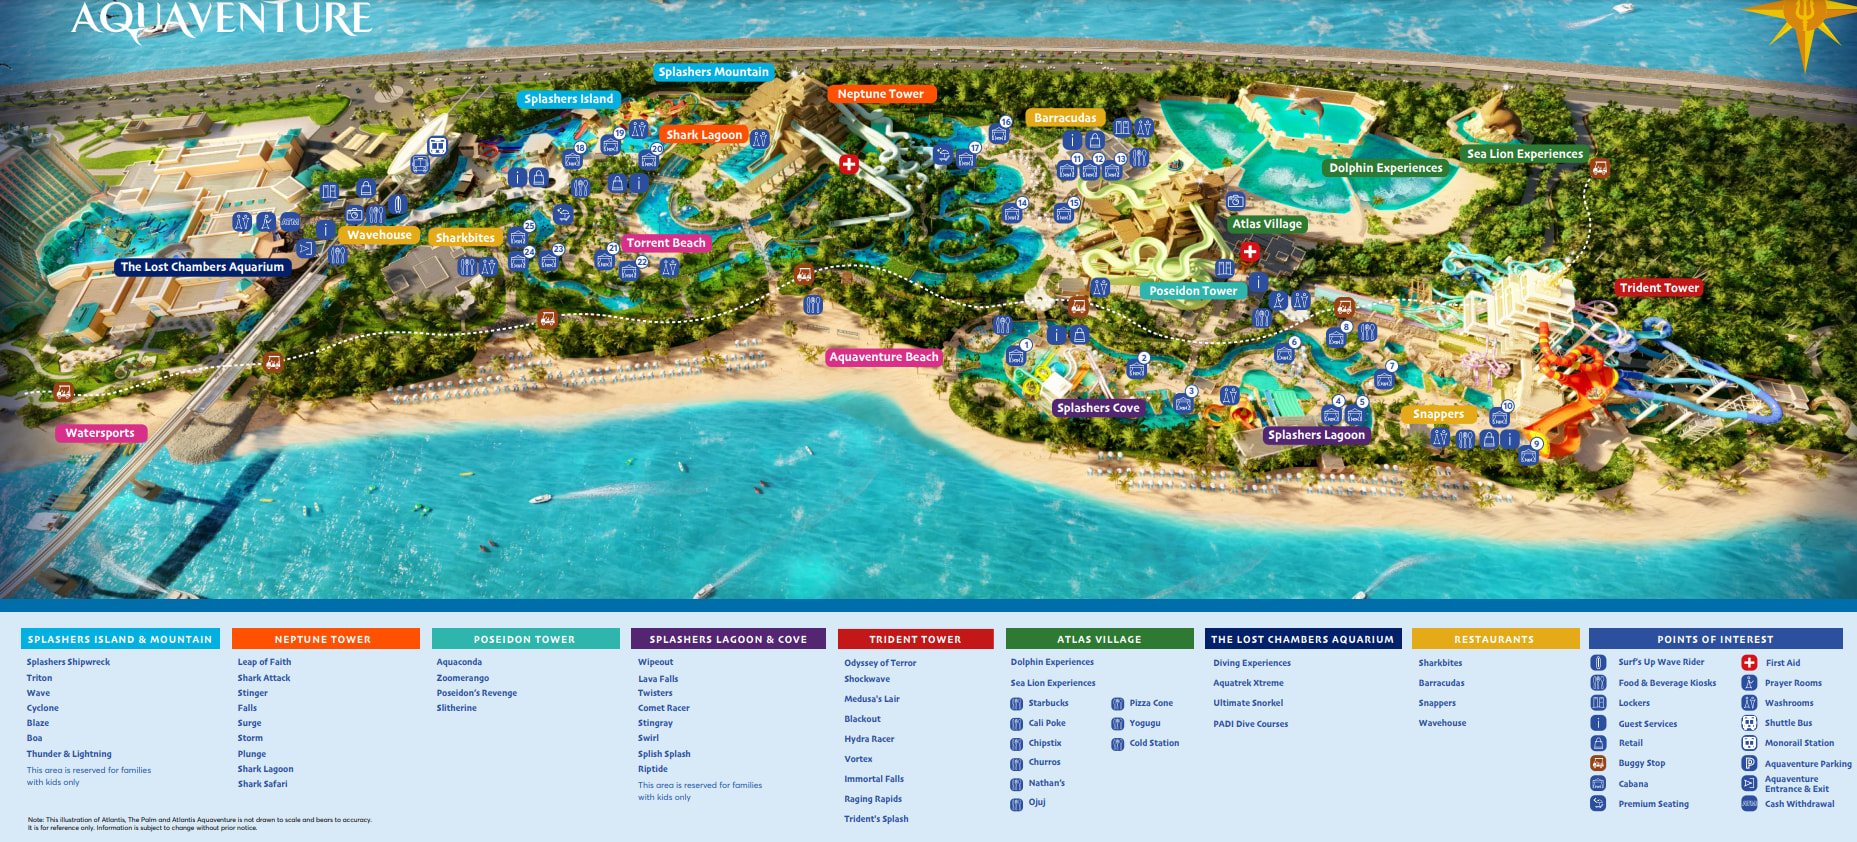 Atlantis Water Park (Aquaventure) map